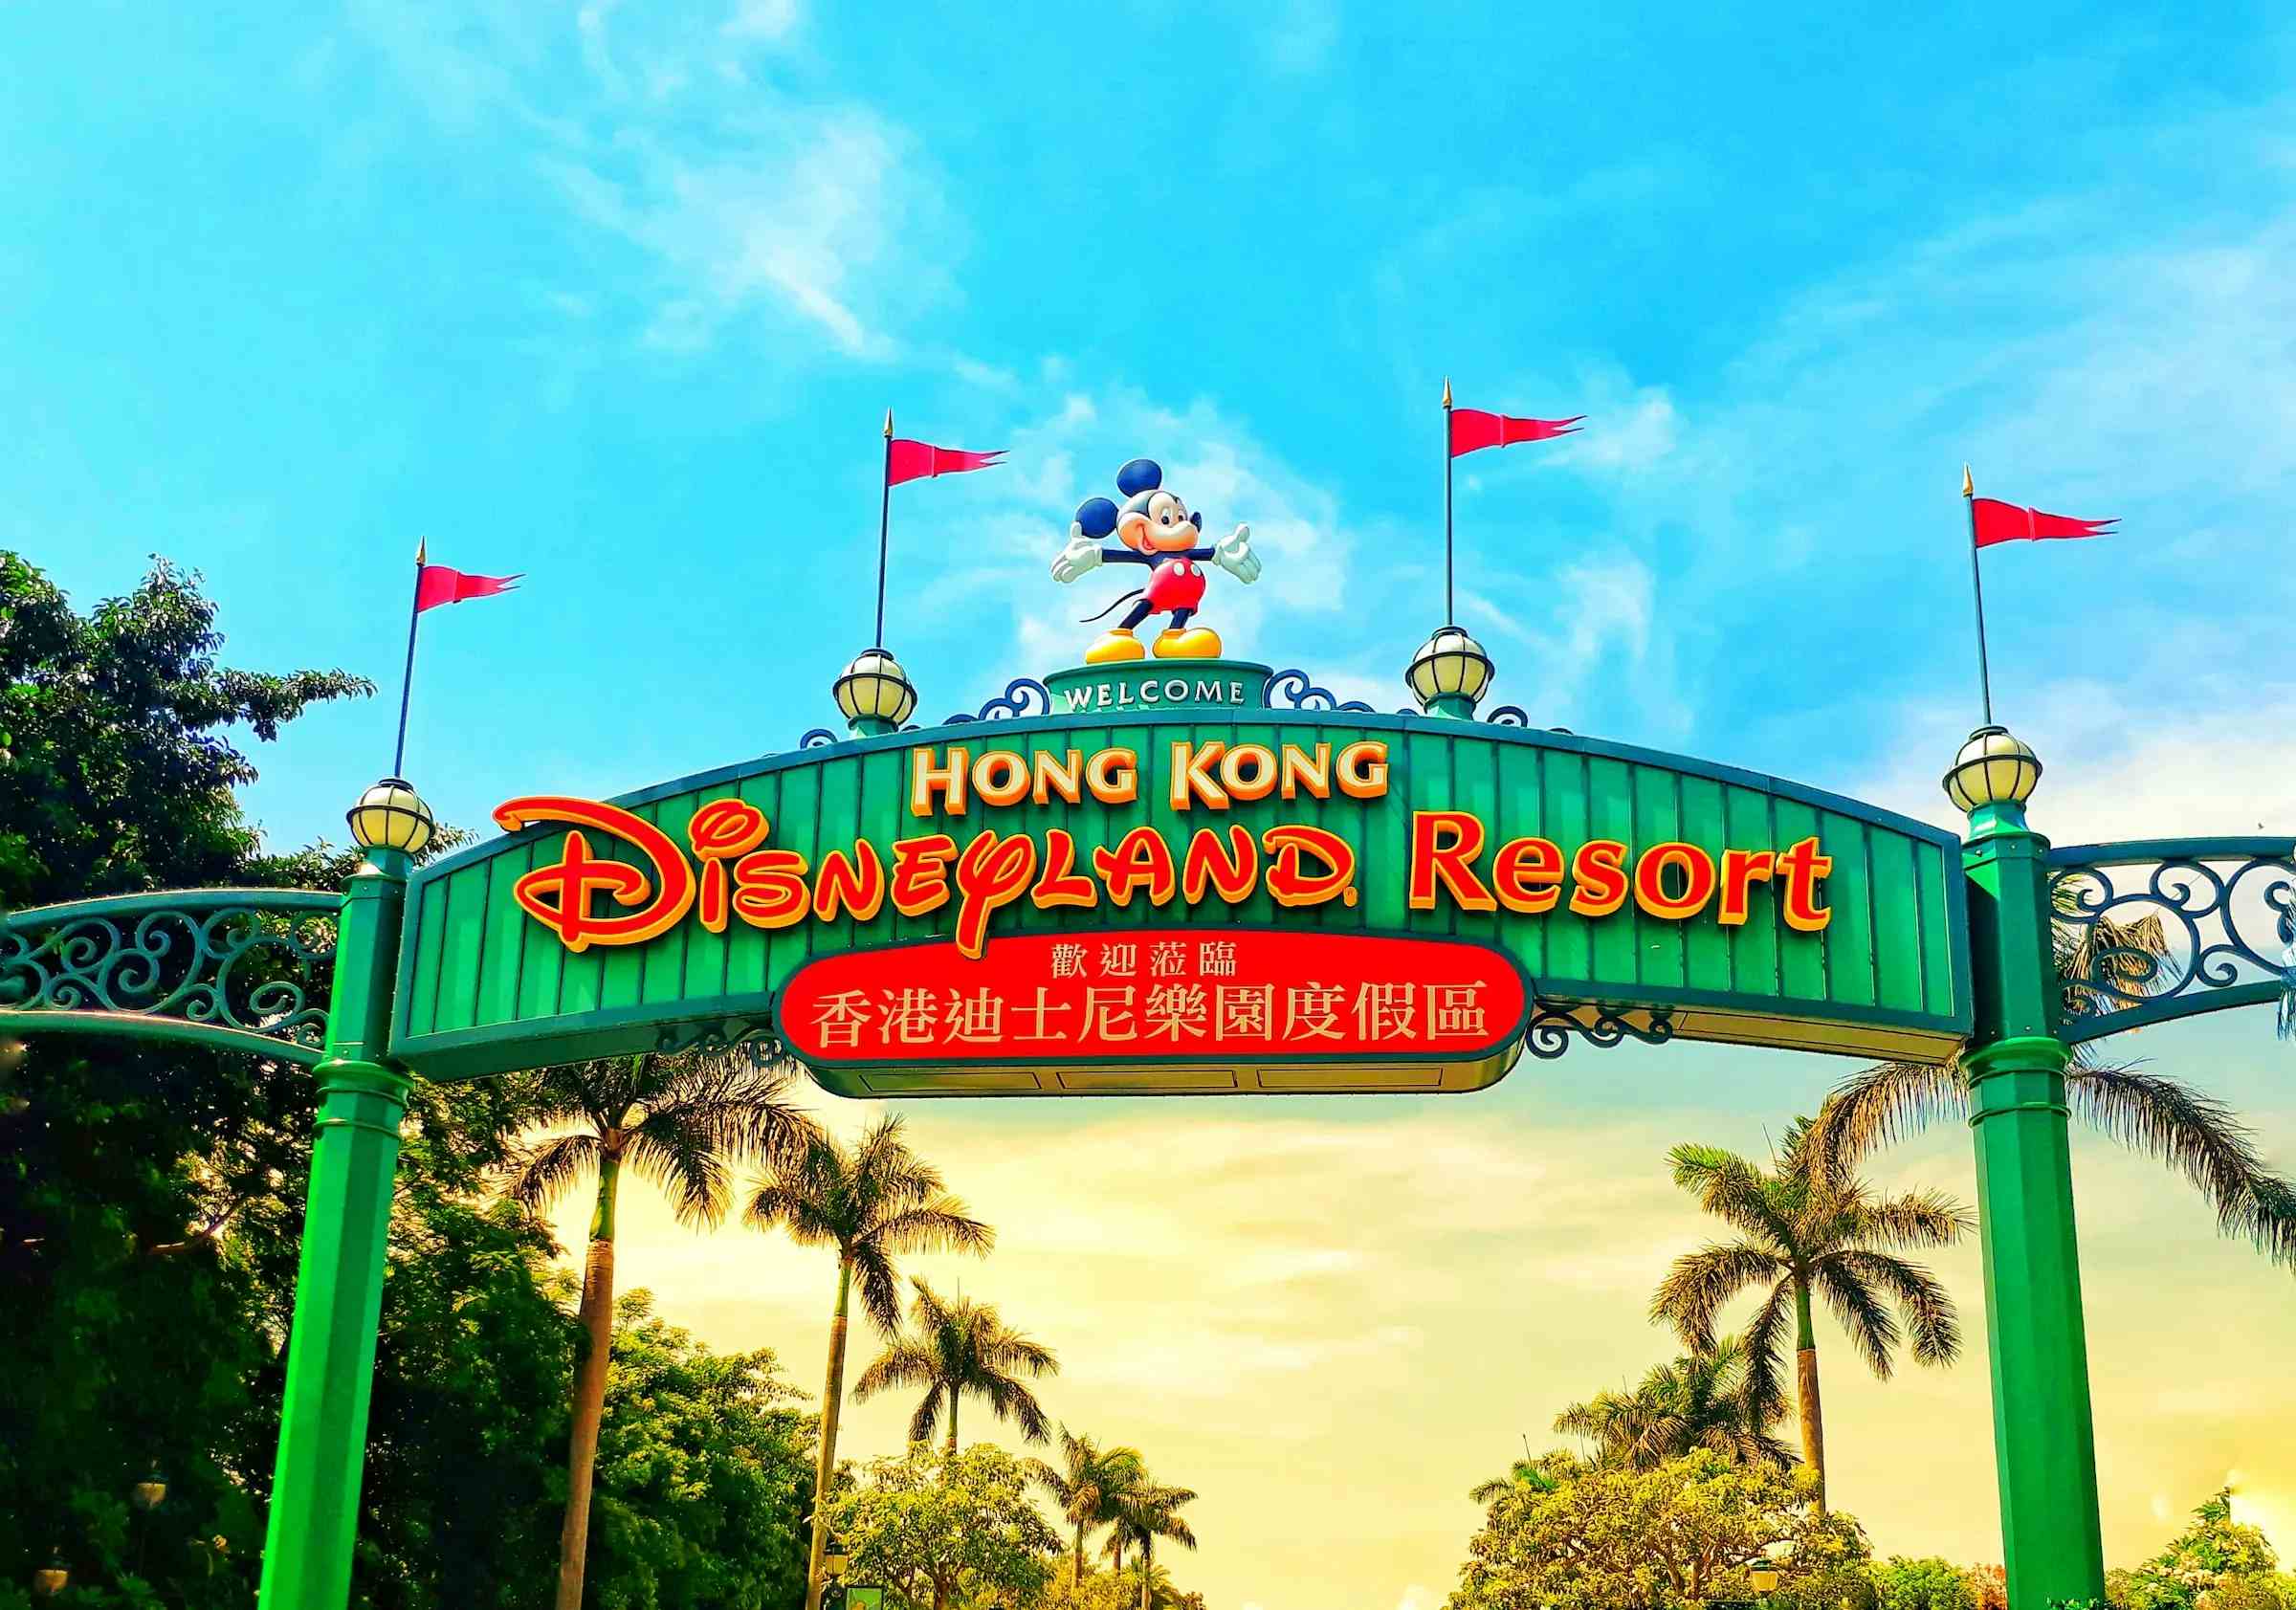 Hong Kong Disneyland Resort image